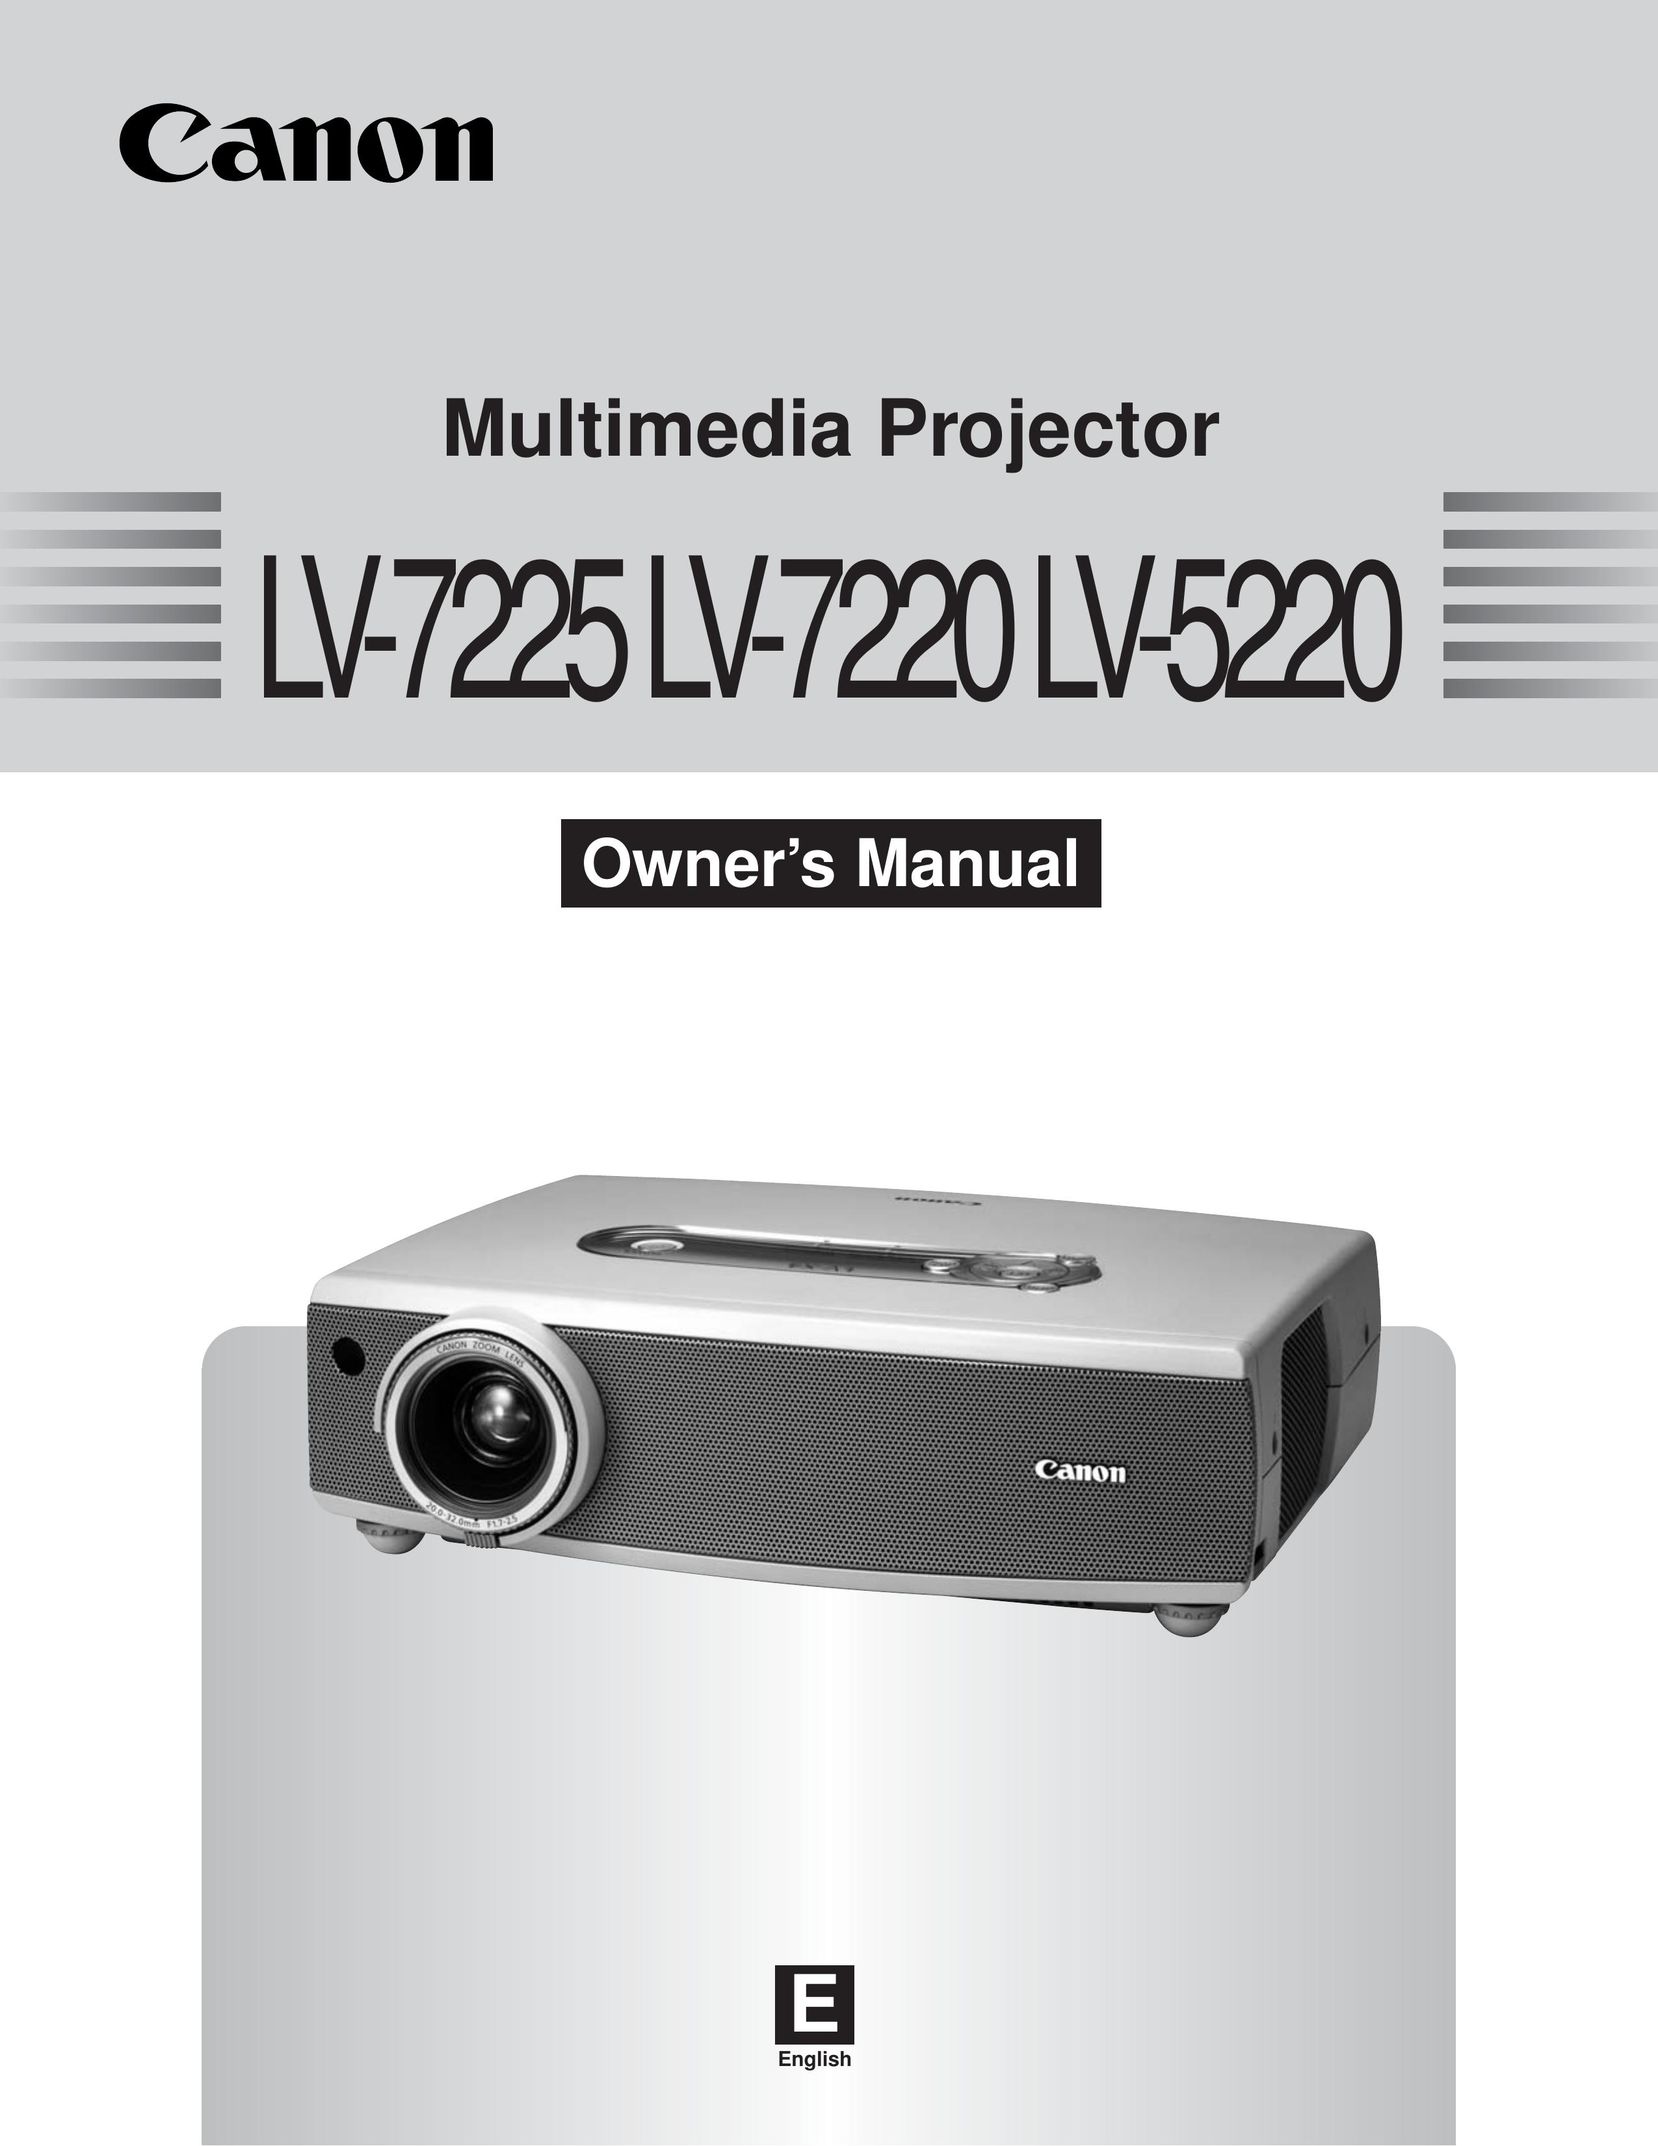 Canon LV-7225 Projector User Manual